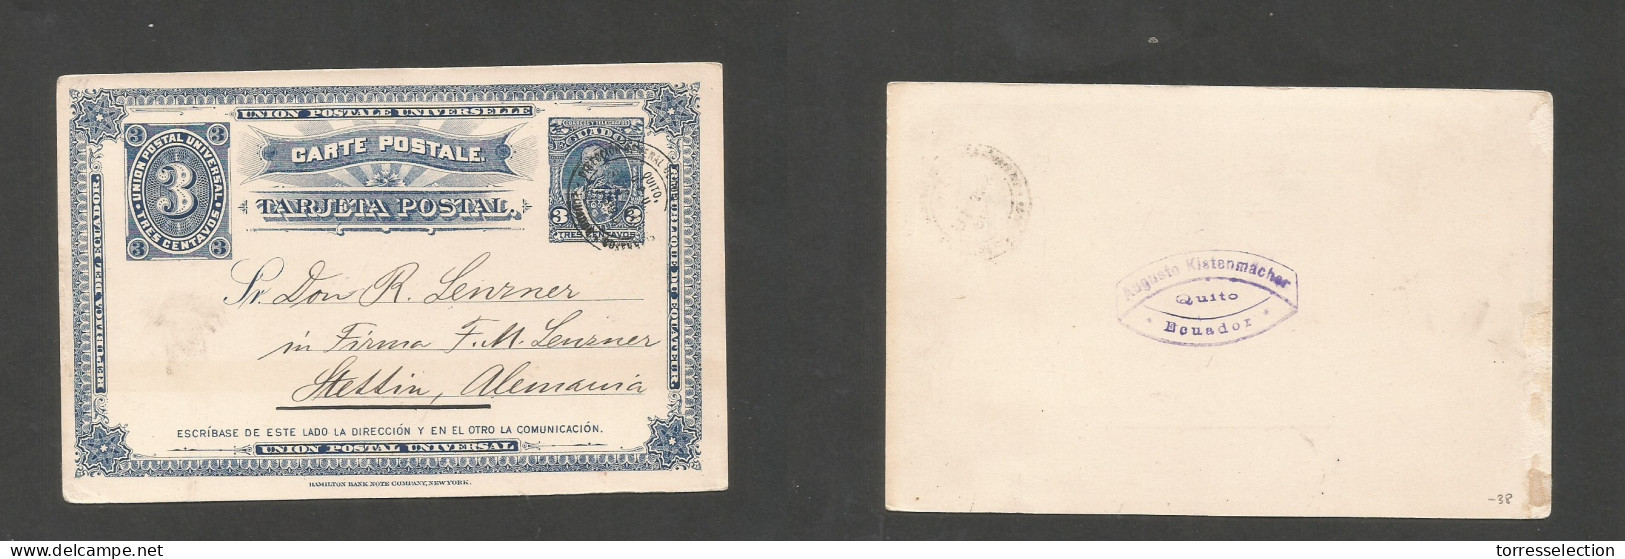 ECUADOR. C. 1896. Quito - Germany, Stettin. 3c Blue Illustrated Stat Card, Cancelled Cds. VF, Scarce Usage. SALE. - Ecuador